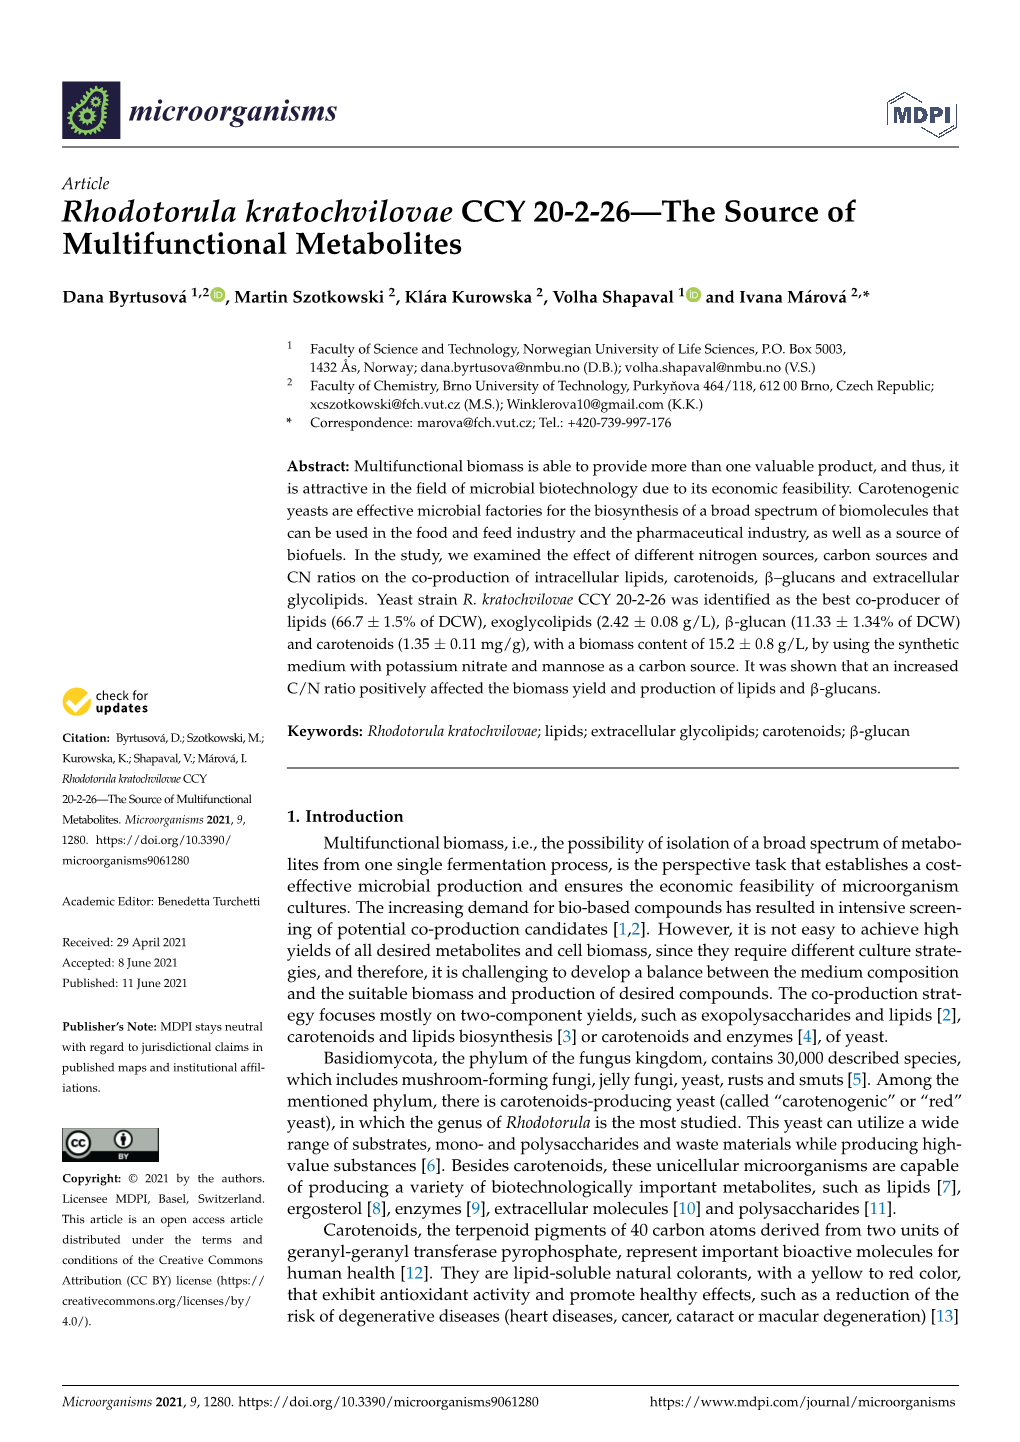 Rhodotorula Kratochvilovae CCY 20-2-26—The Source of Multifunctional Metabolites